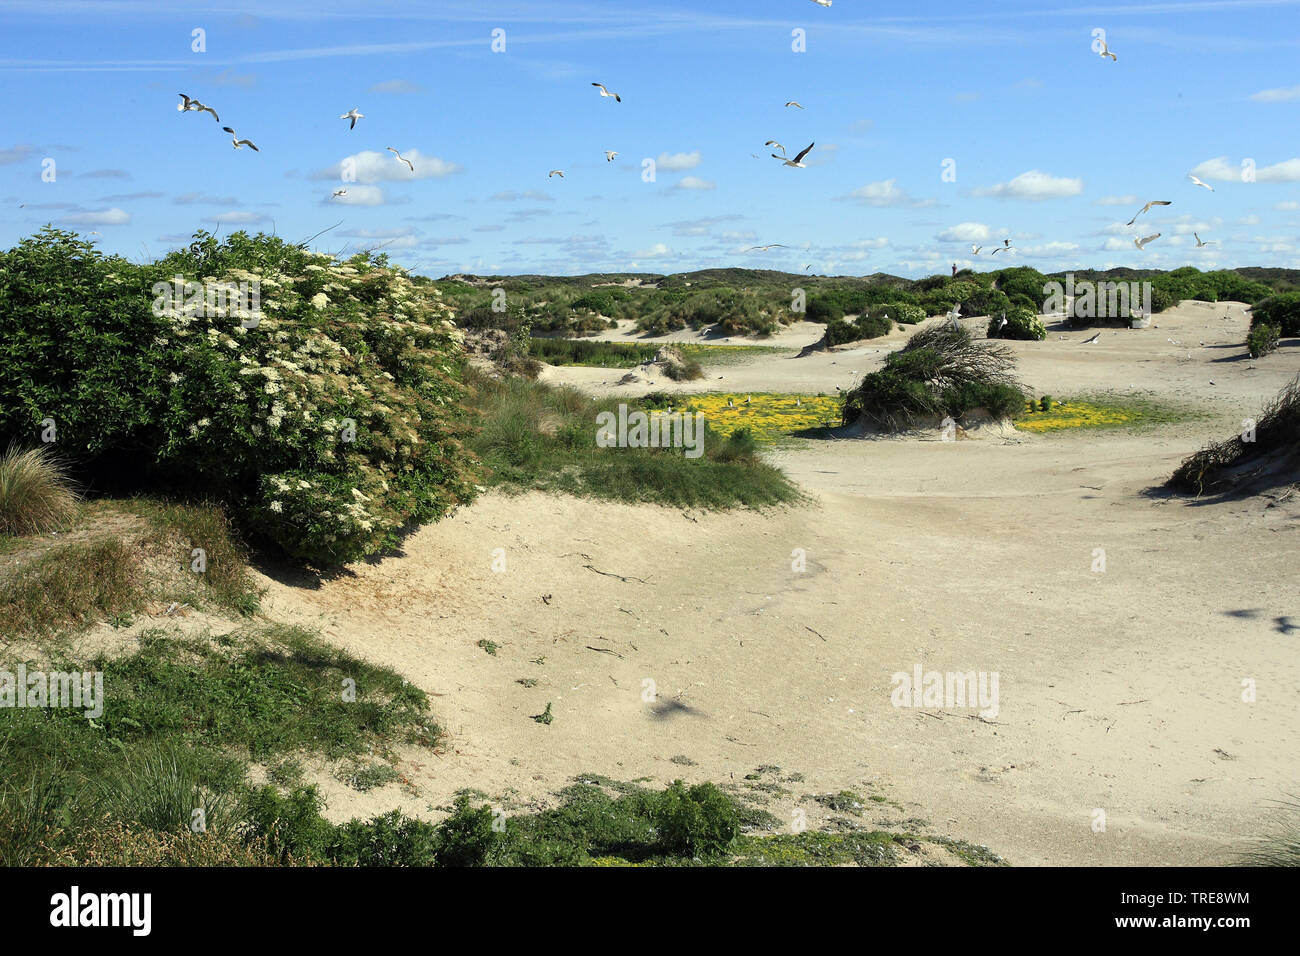 Gull colonia di dune di Schouwen-Duiveland, Paesi Bassi Foto Stock